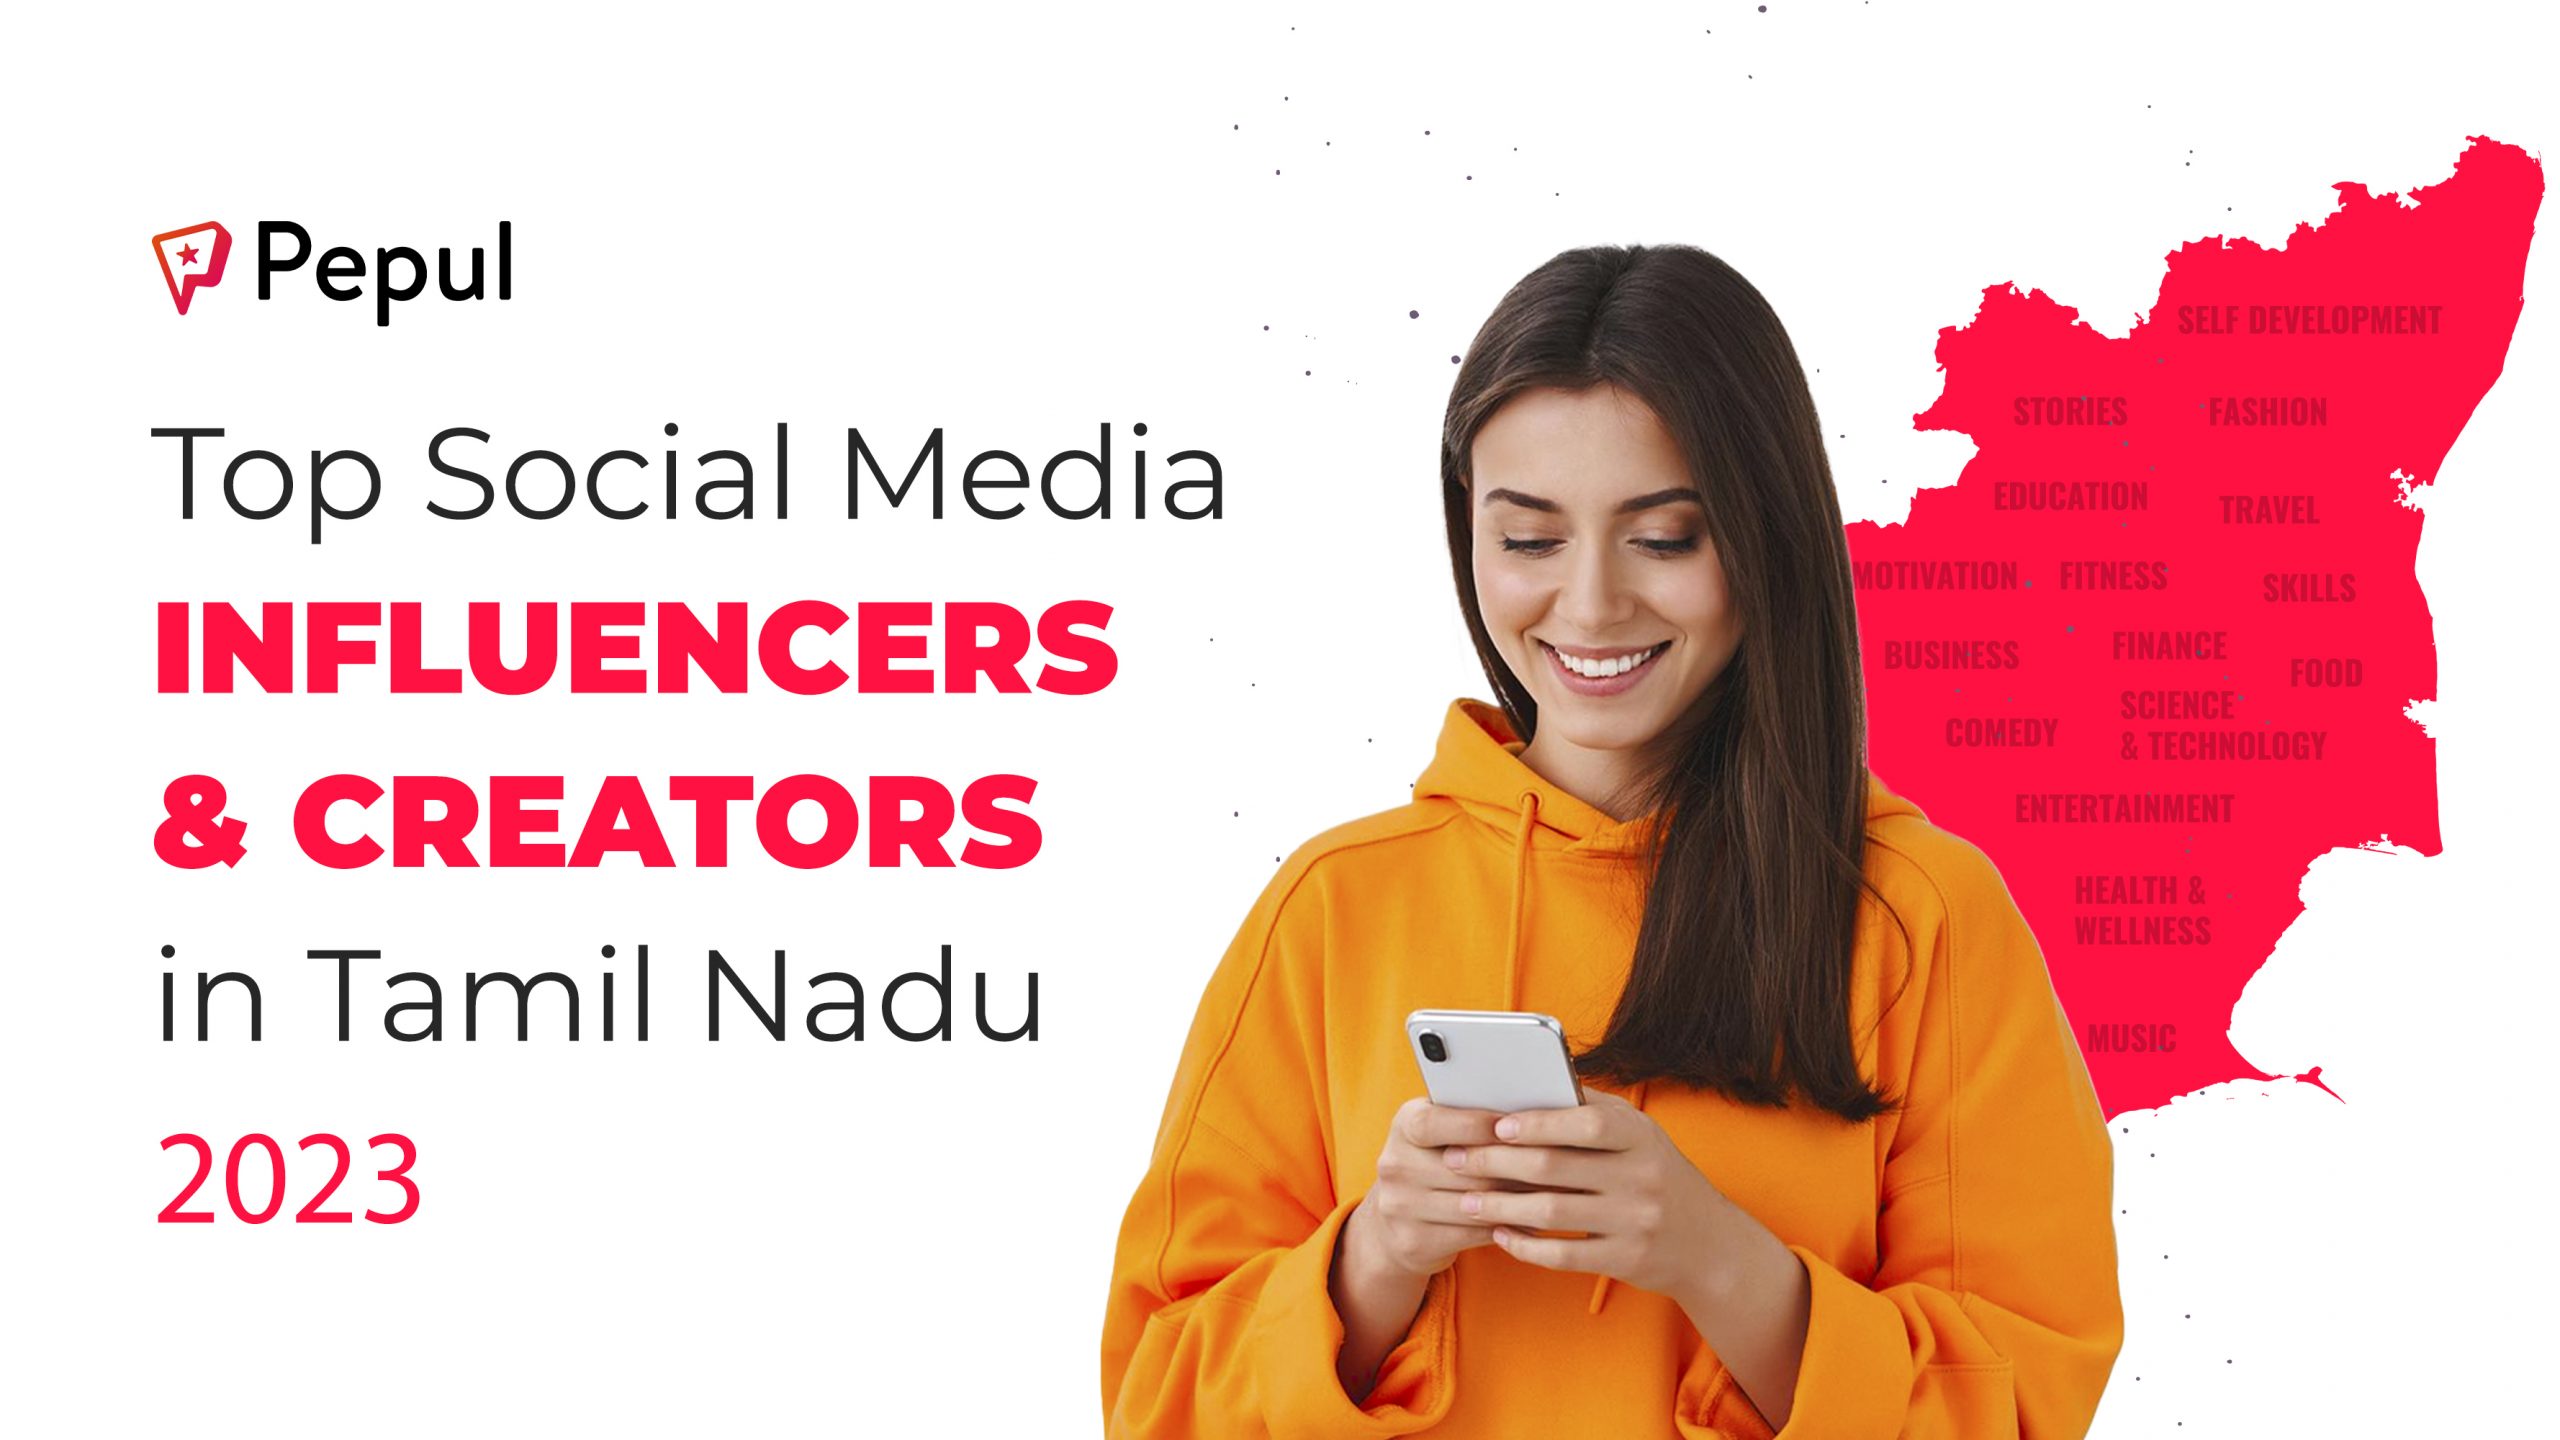 Top Tamil Social Media Influencers and Creators in 2023